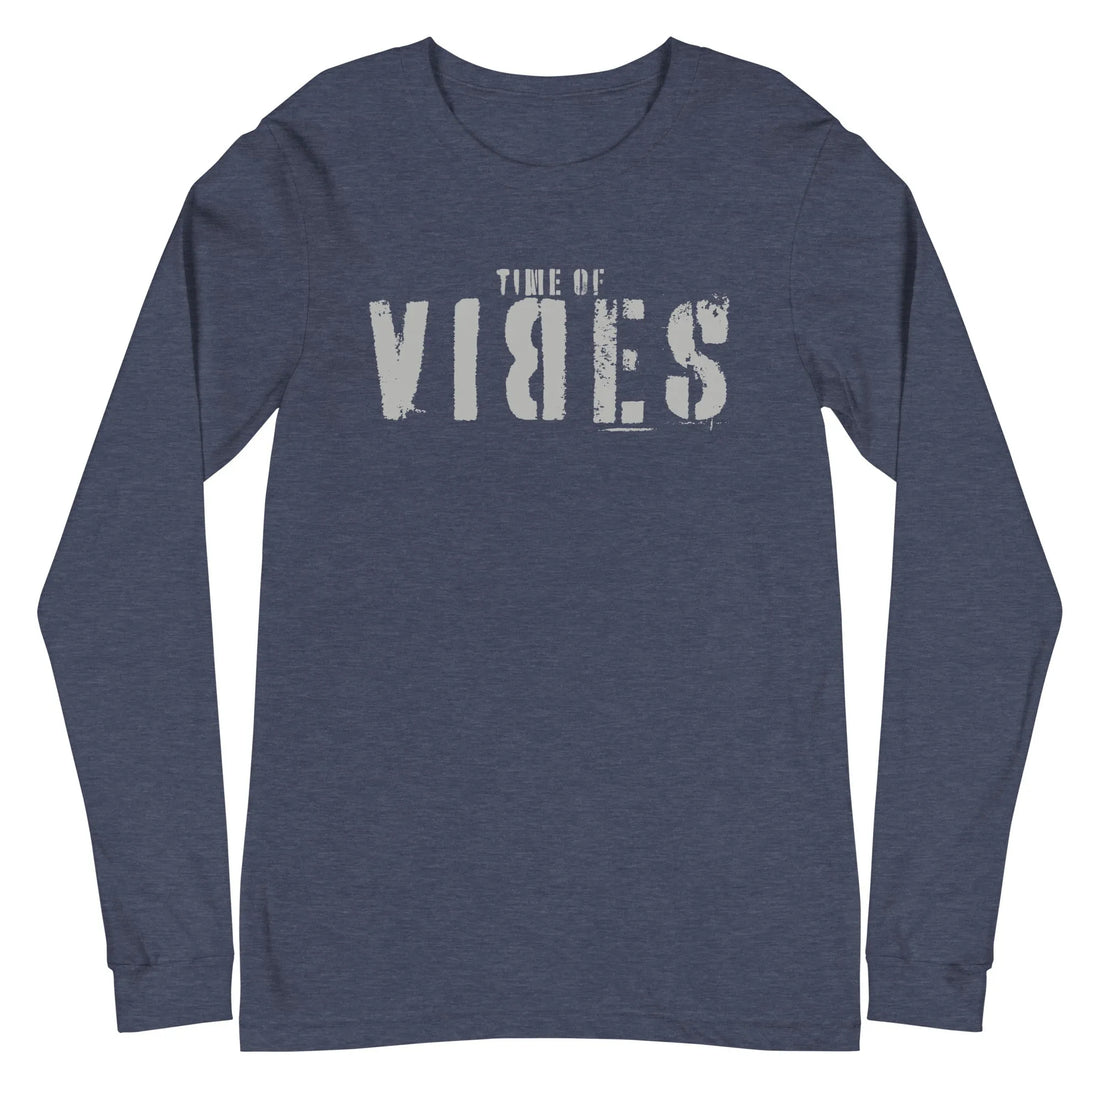 Langarm Baumwoll T-Shirt VIBES (Graublau/Silber), Langarm T-Shirts, Time Of Vibes